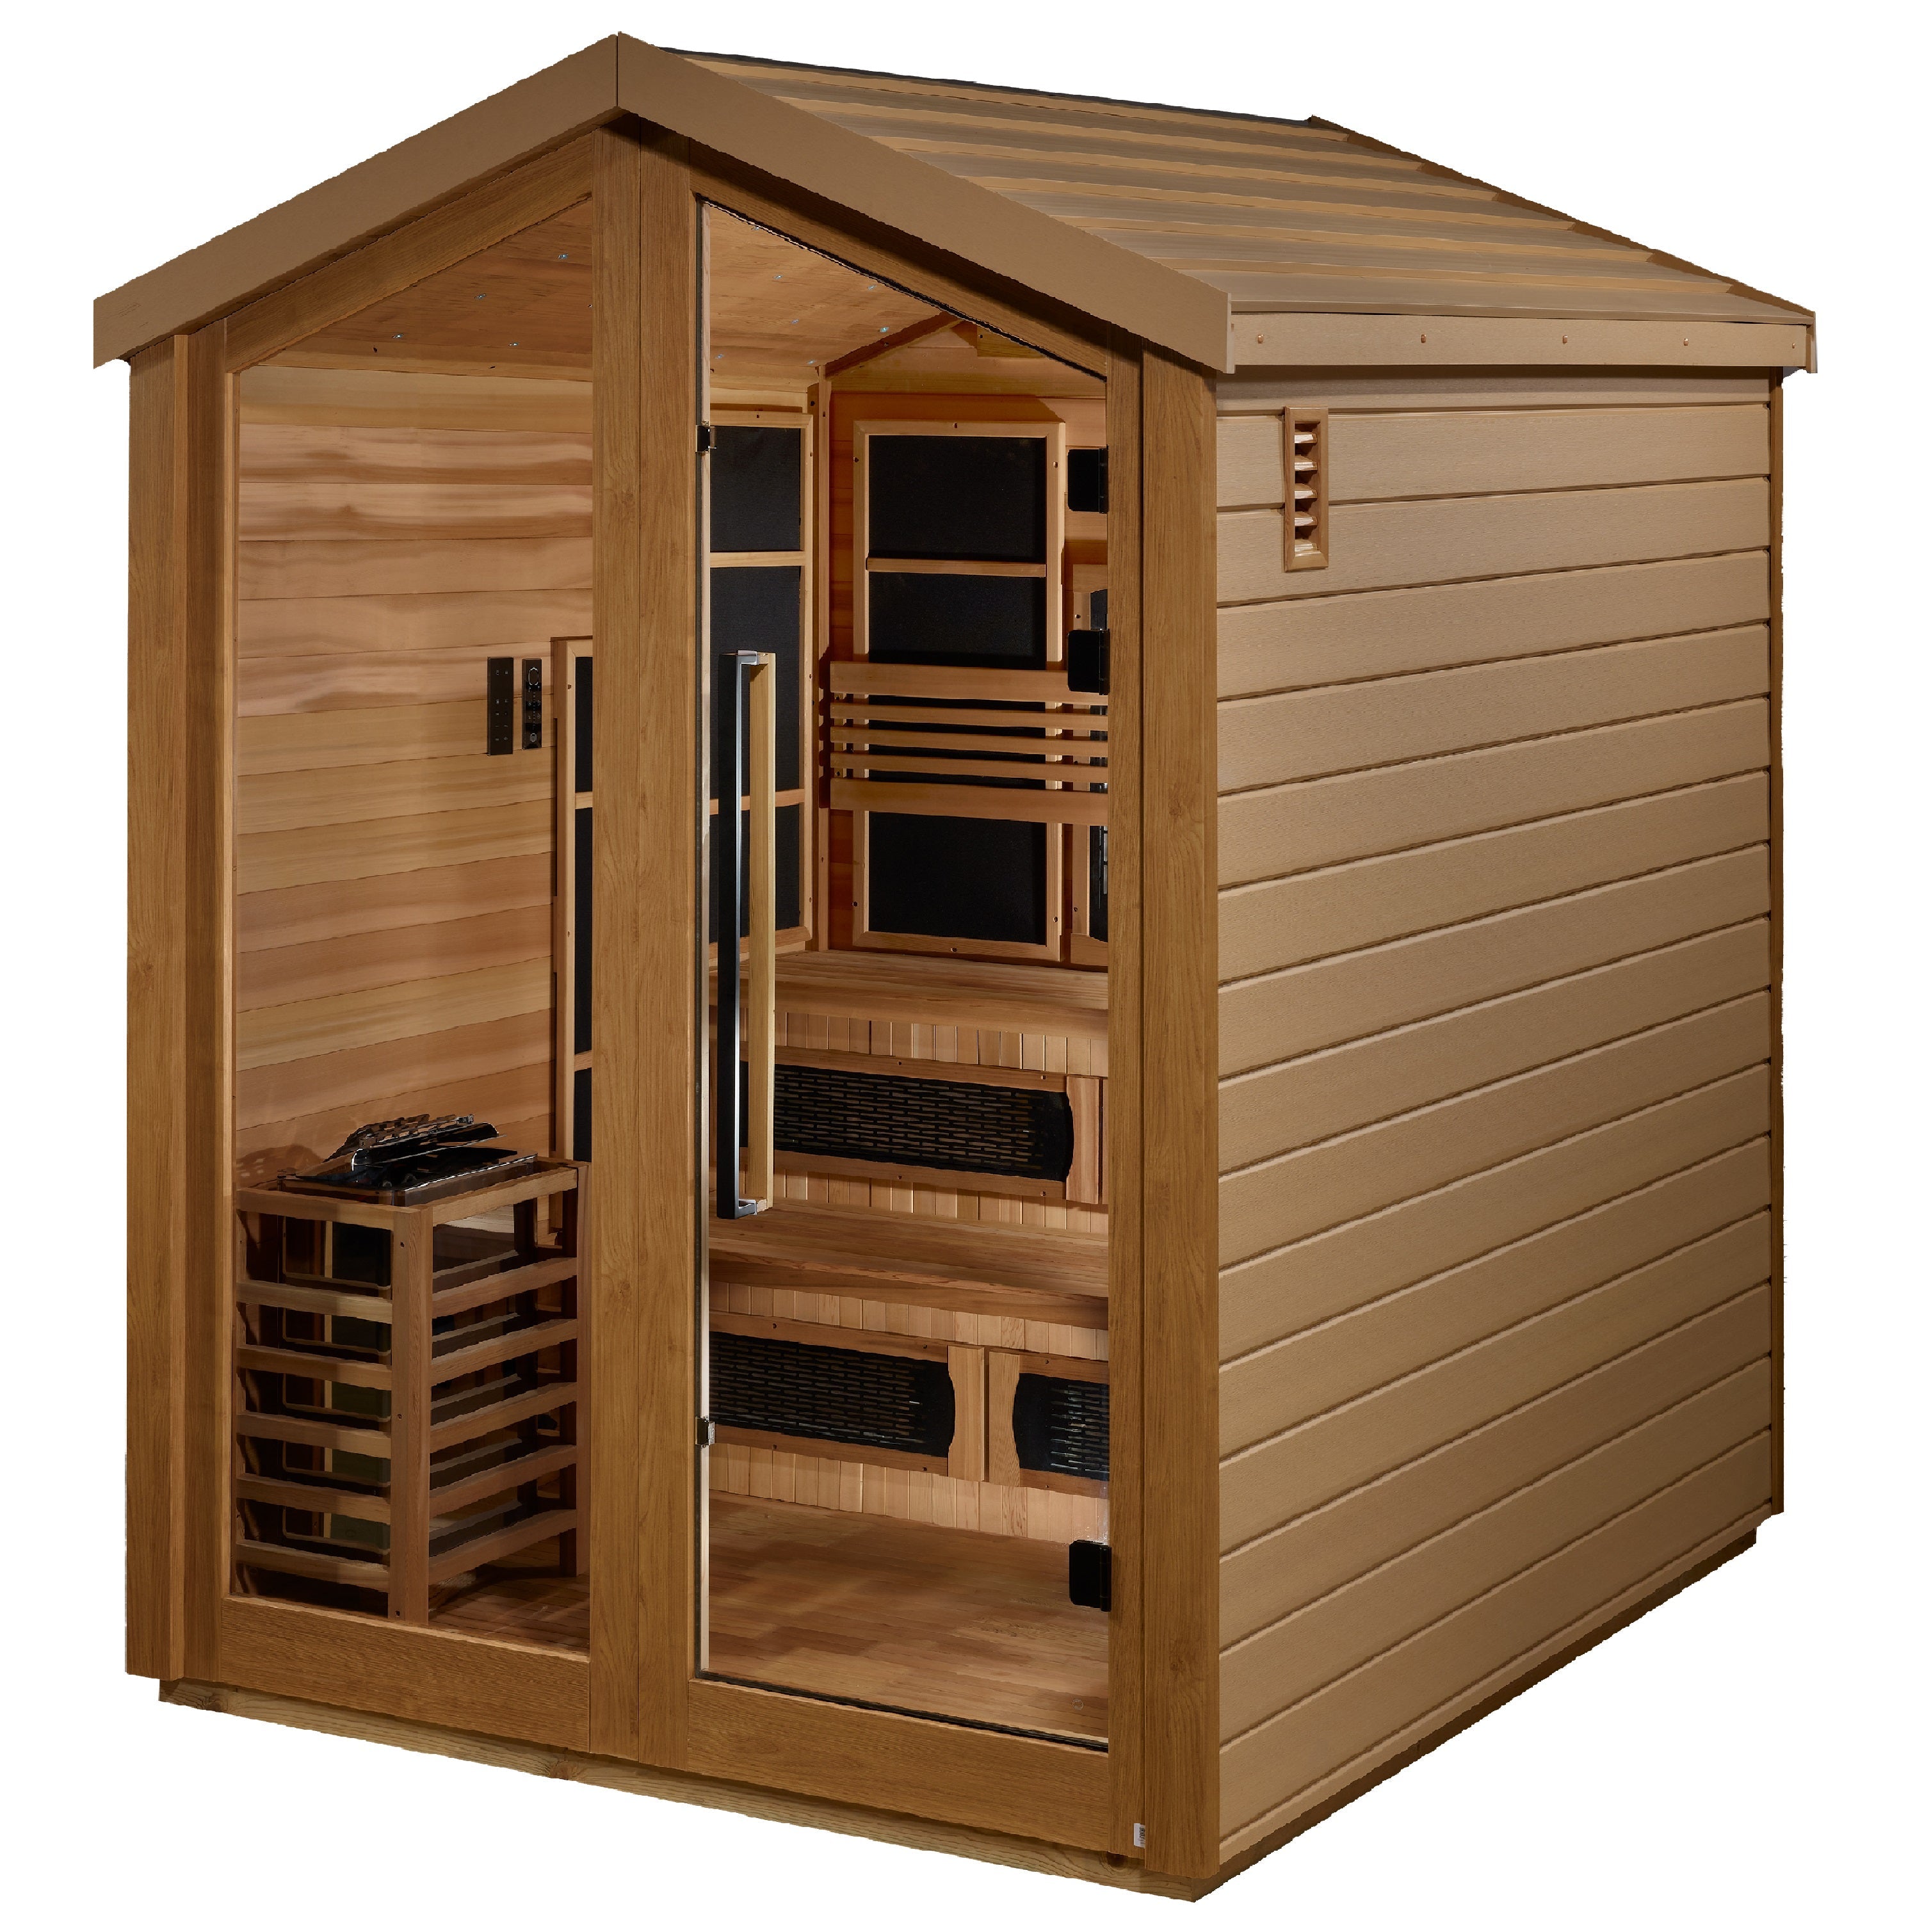 Golden Designs Kaskinen 6 Person Hybrid (PureTech™ Full Spectrum IR or Traditional Stove) Outdoor Sauna (GDI-8526-01) - Canadian Red Cedar Interior  Golden Designs Saunas   